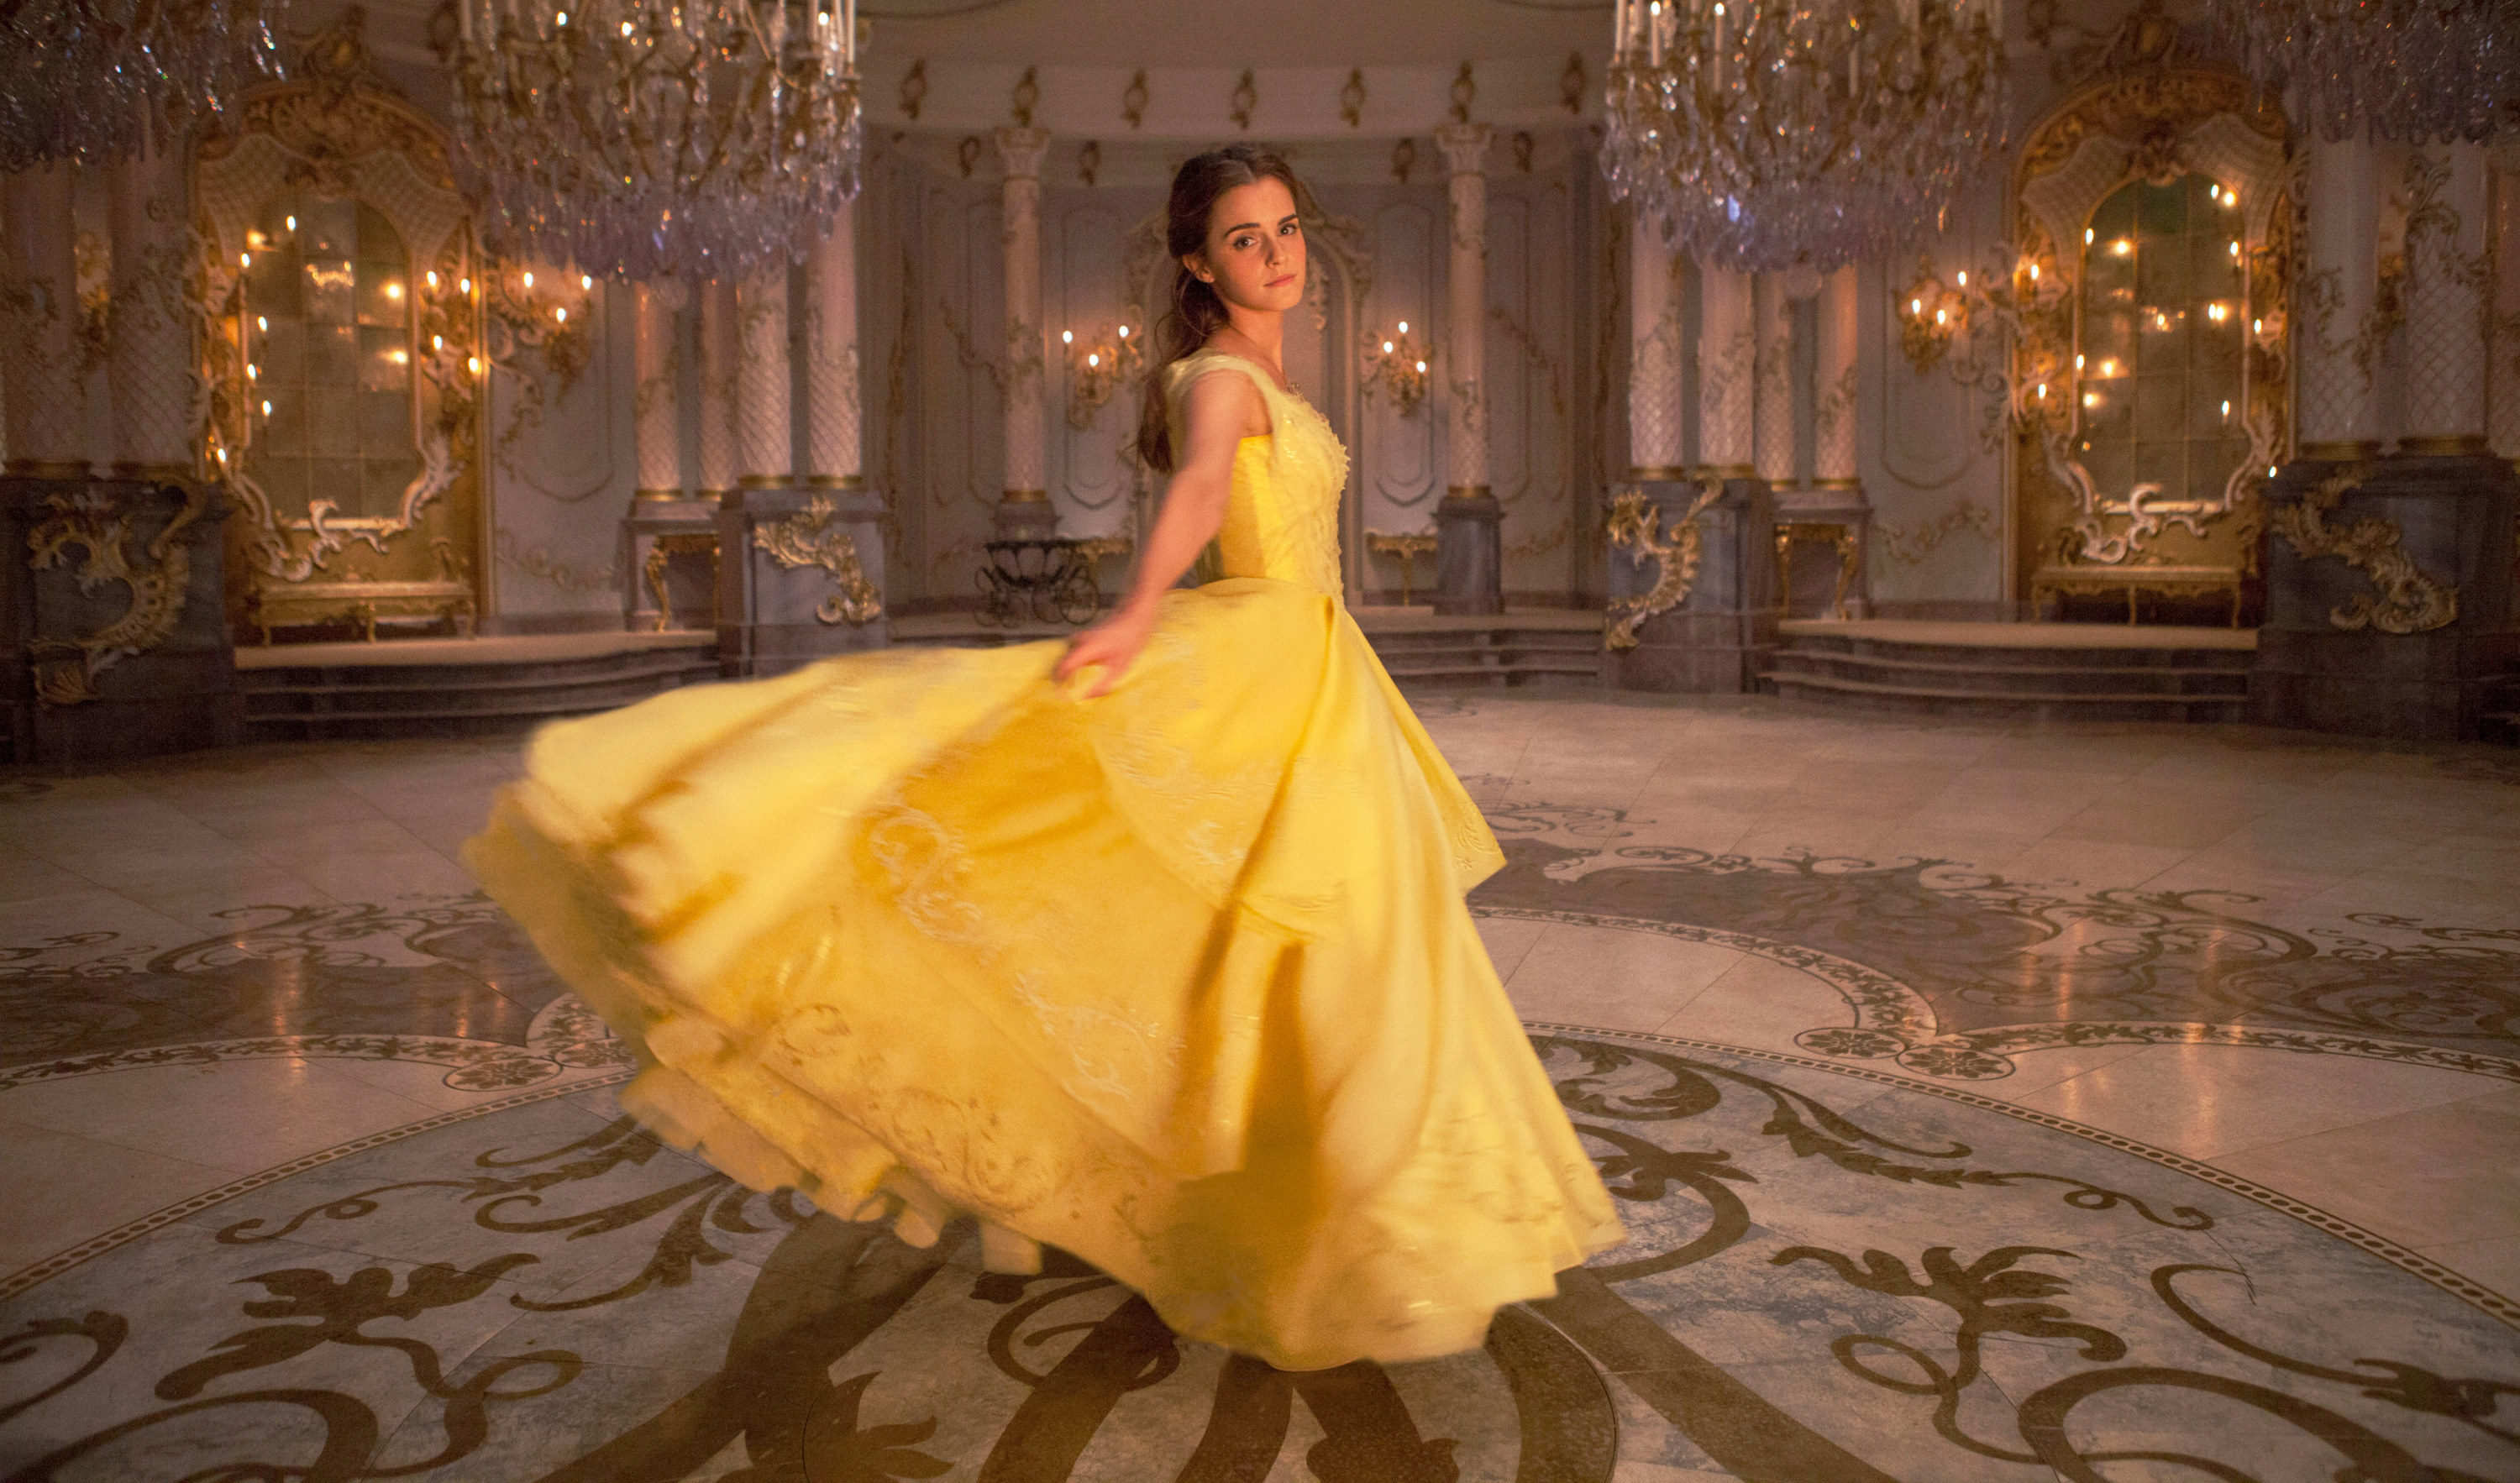 Emma as Belle dancing in a flowing gown